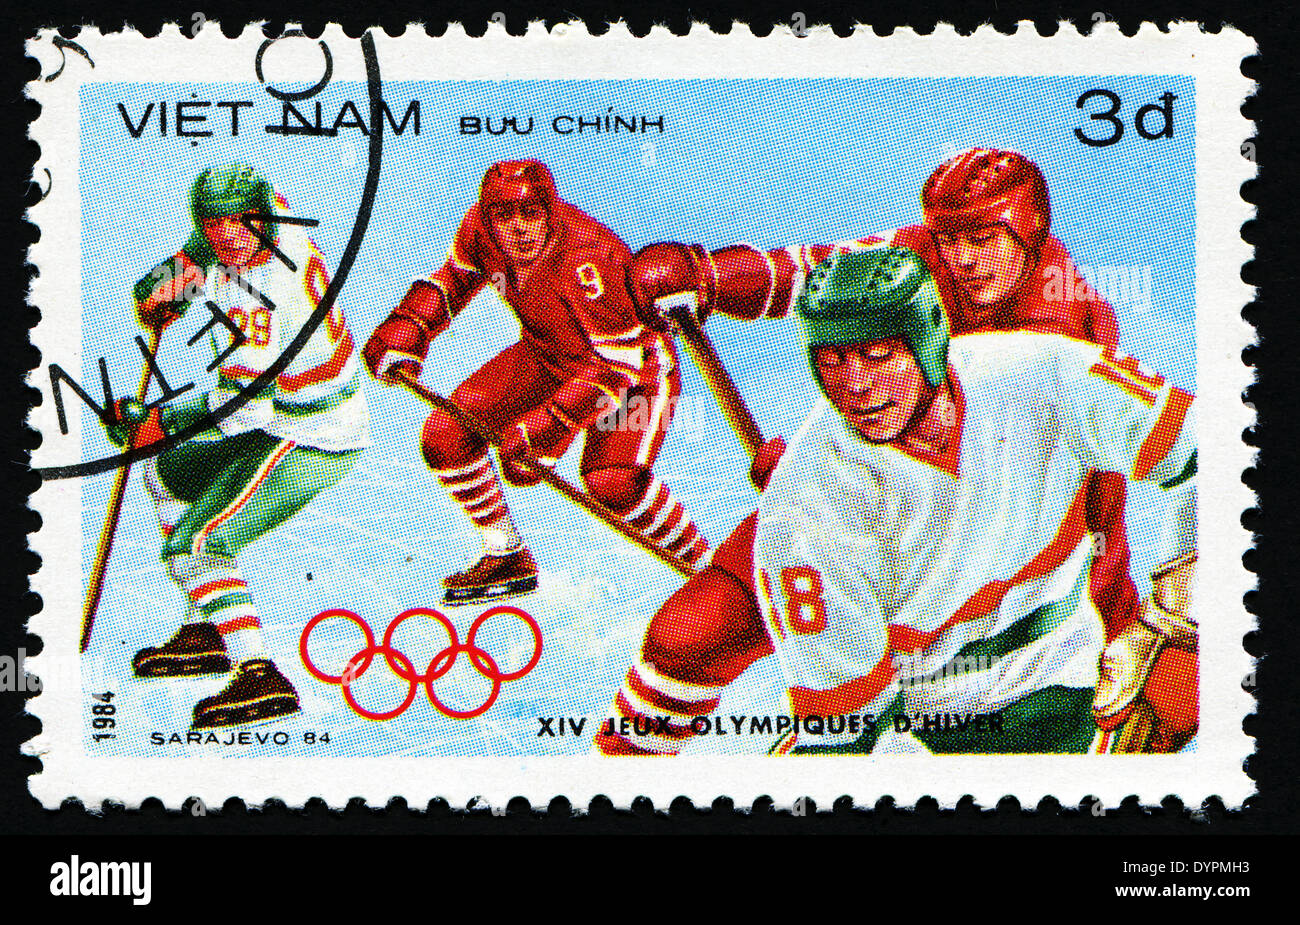 VIETNAM - CIRCA 1984: A stamp printed in VIETNAM shows hockey, series Winter Olympic Games in Sarajevo 1984, circa 1984 Stock Photo